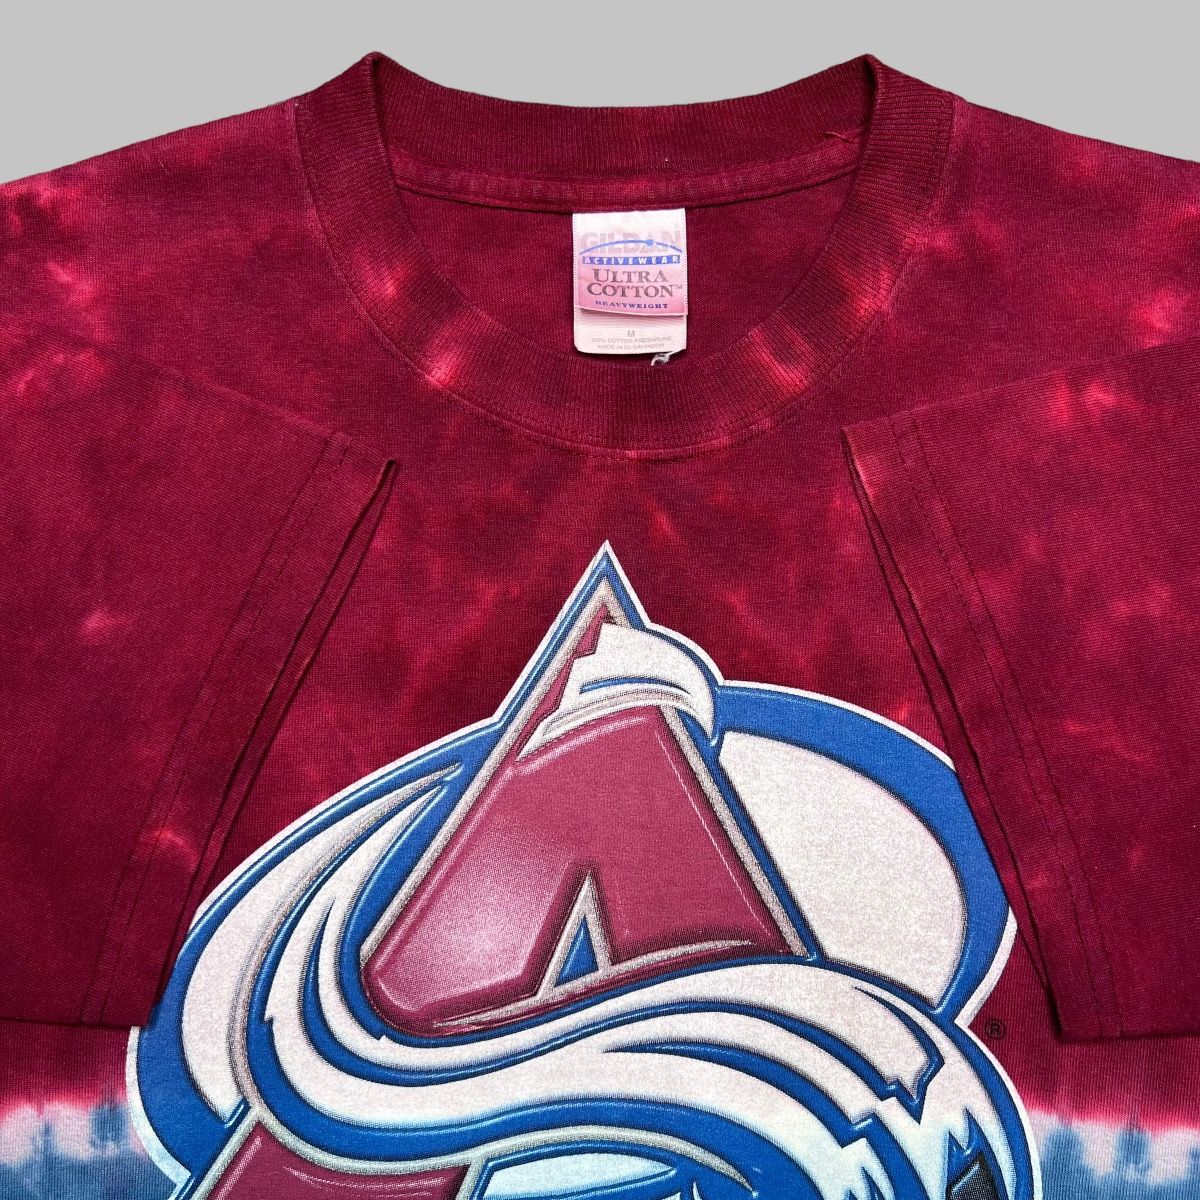 Vintage Vintage 1990s NHL Colorado Avalanche Tie Dye All Over Tee Size US M / EU 48-50 / 2 - 3 Thumbnail